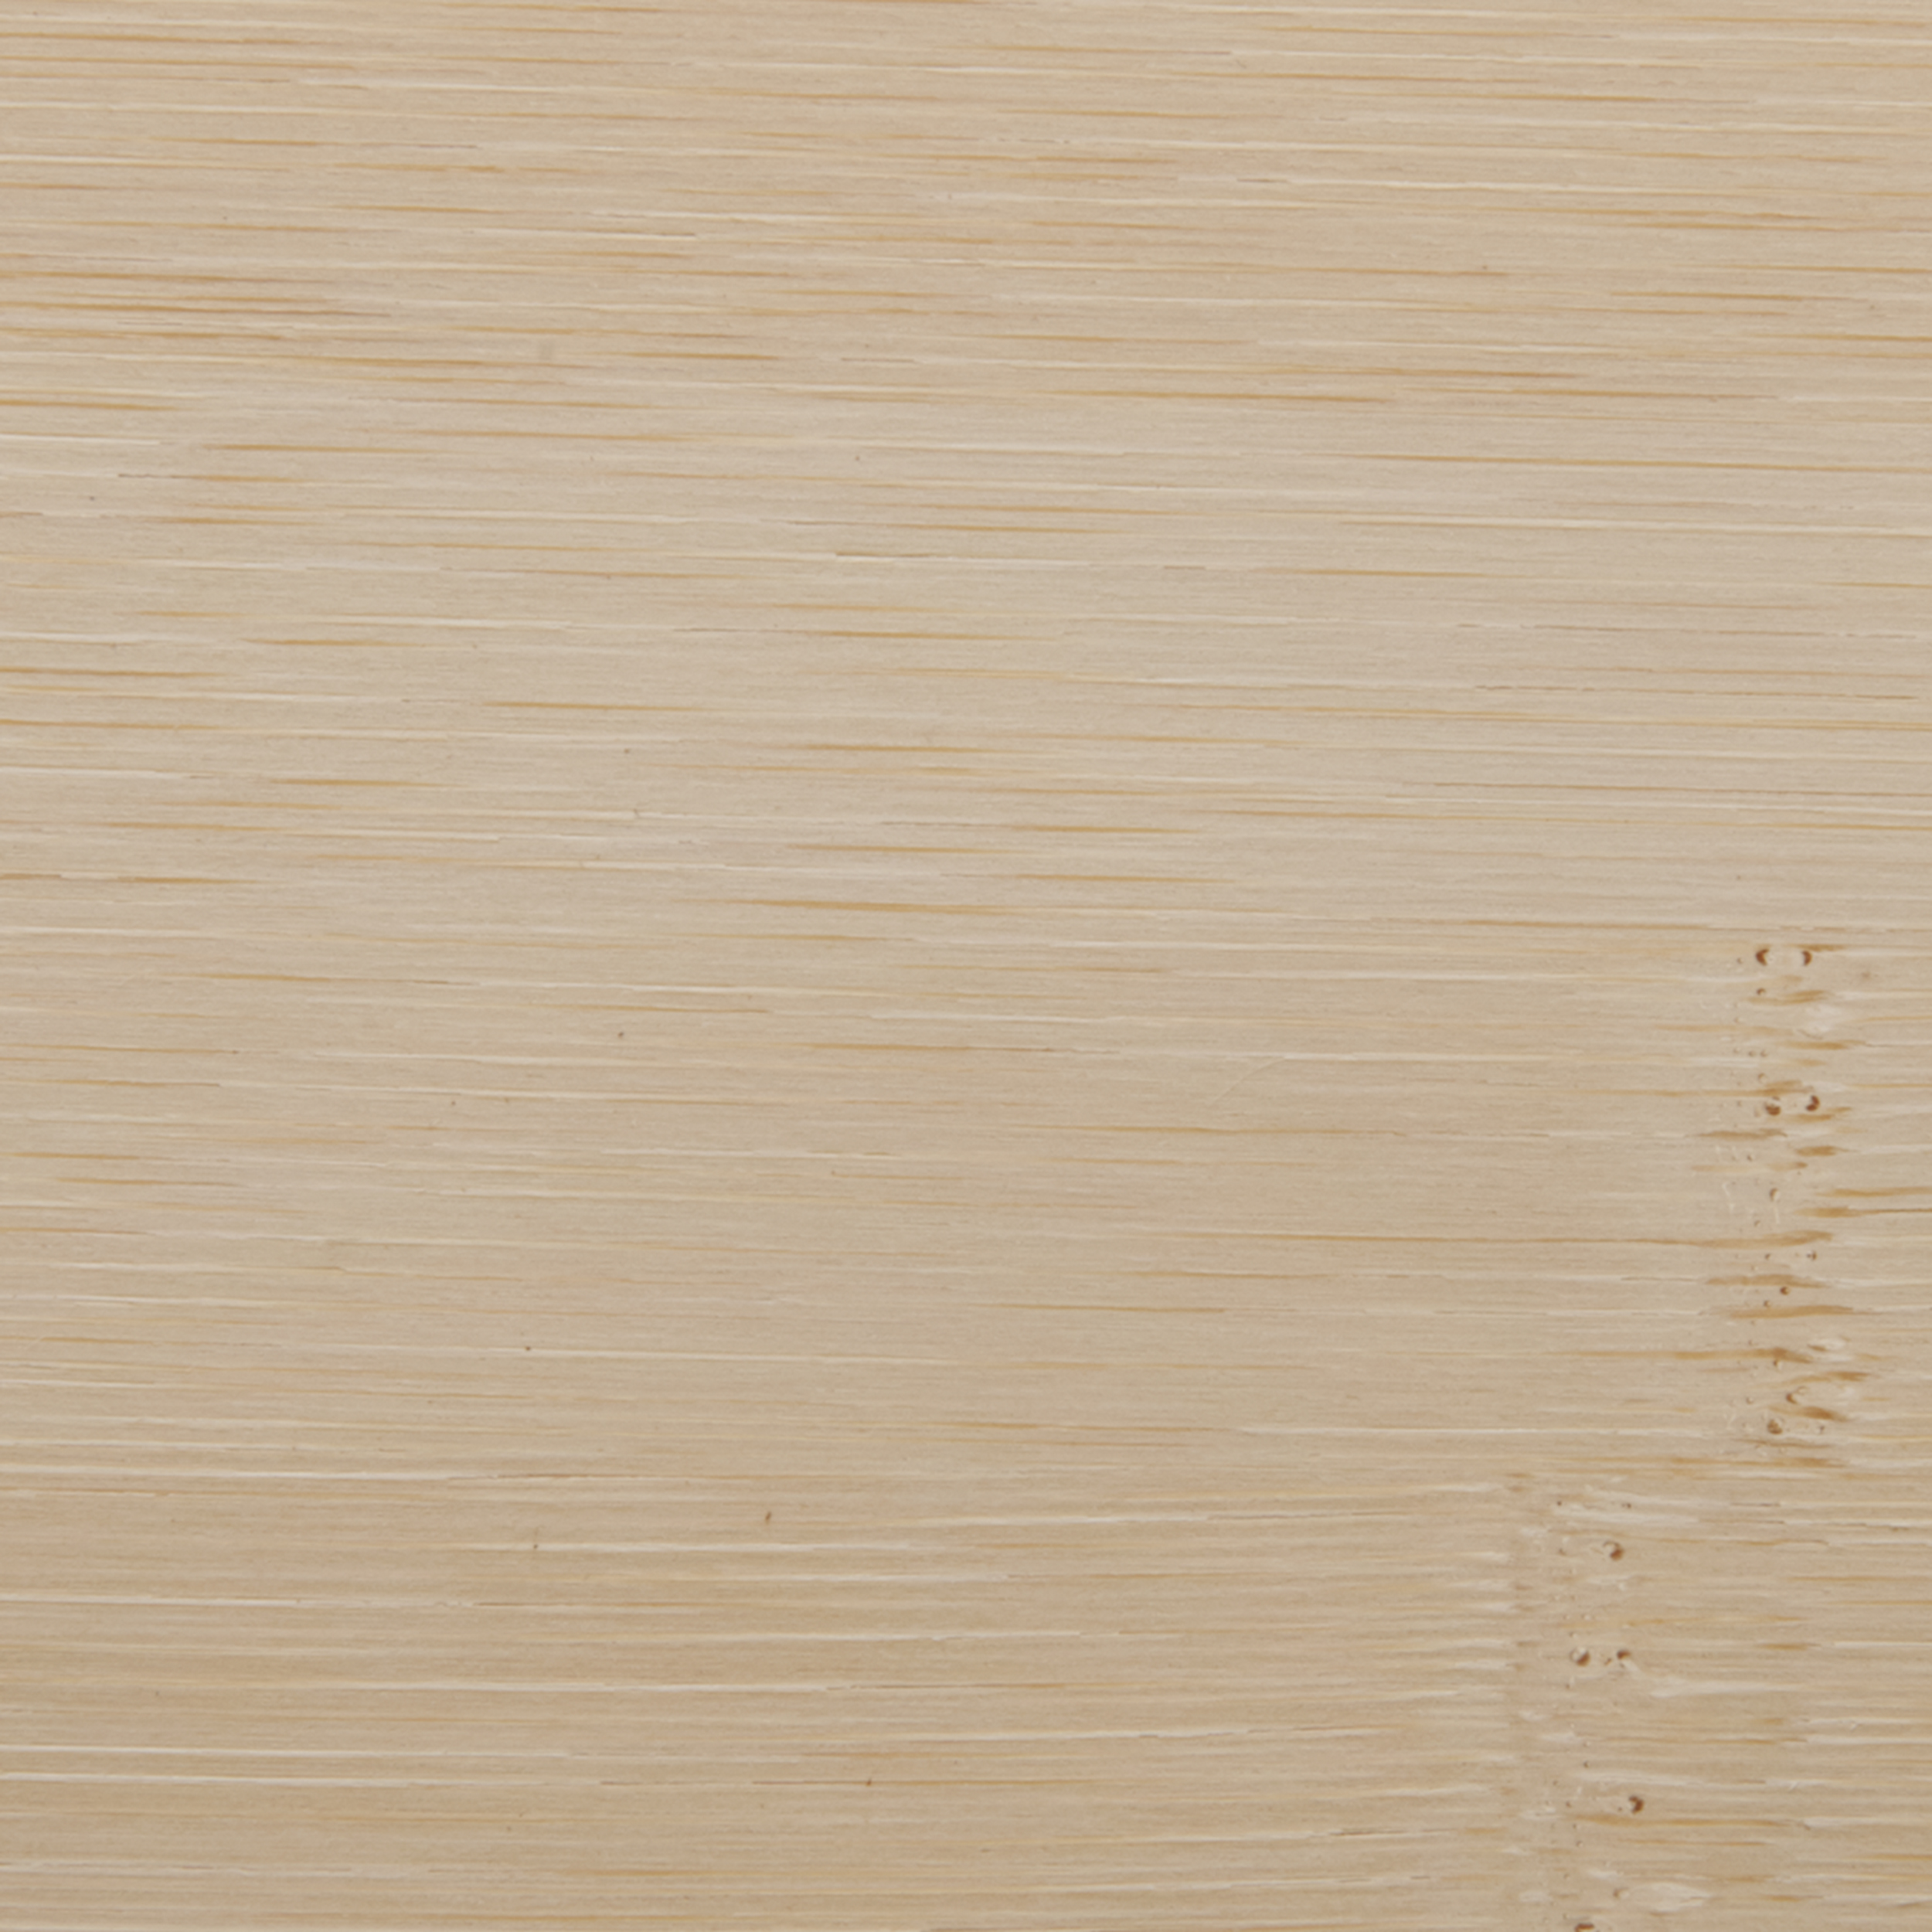 Bamboo Veneer Sheet White Horizontal Grain 4